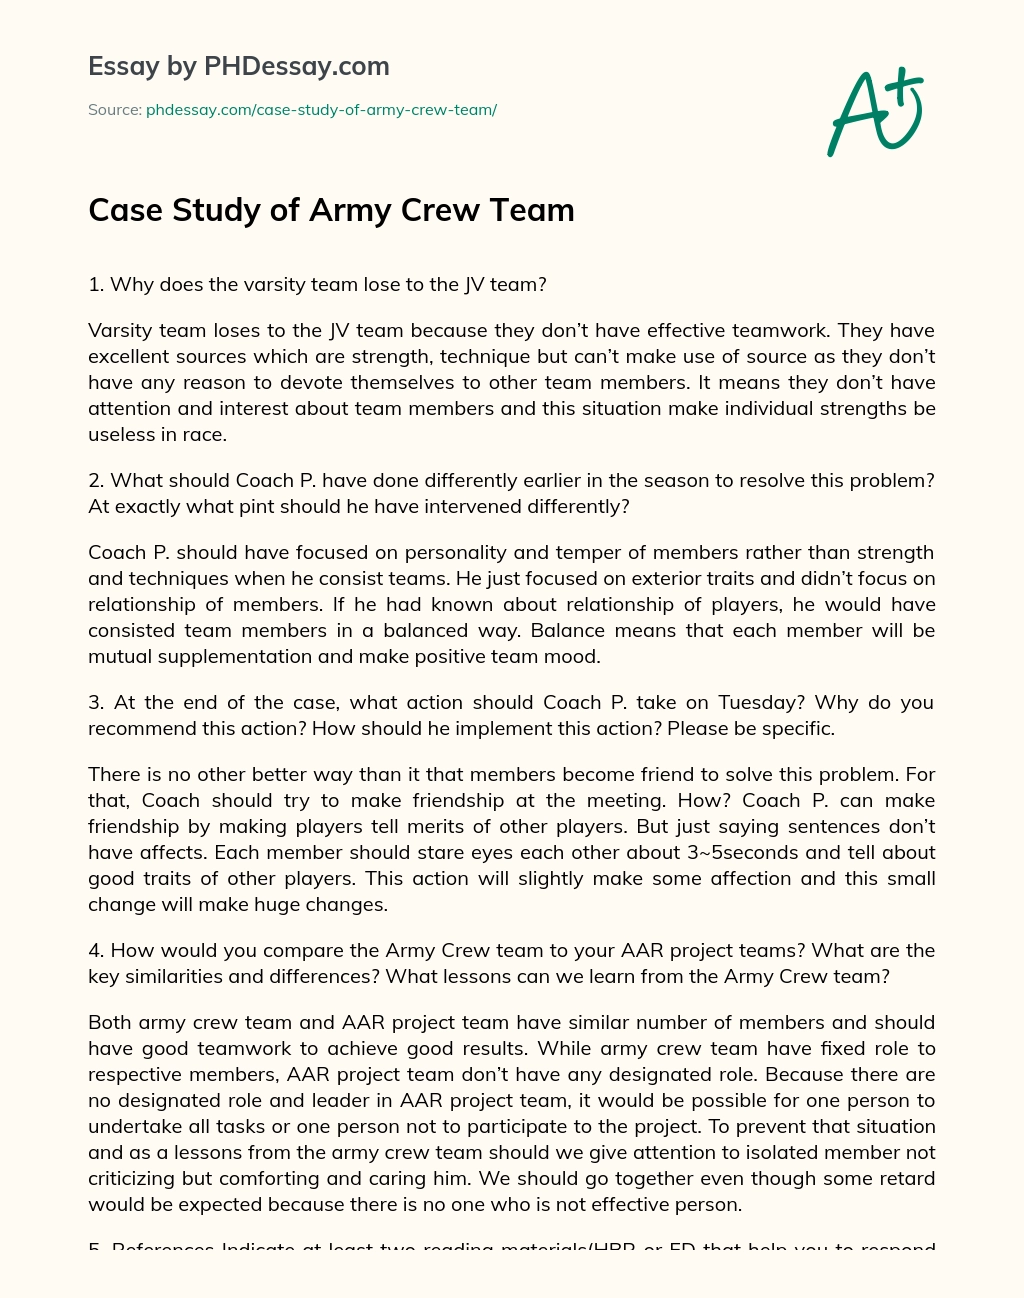 Case Study of Army Crew Team essay